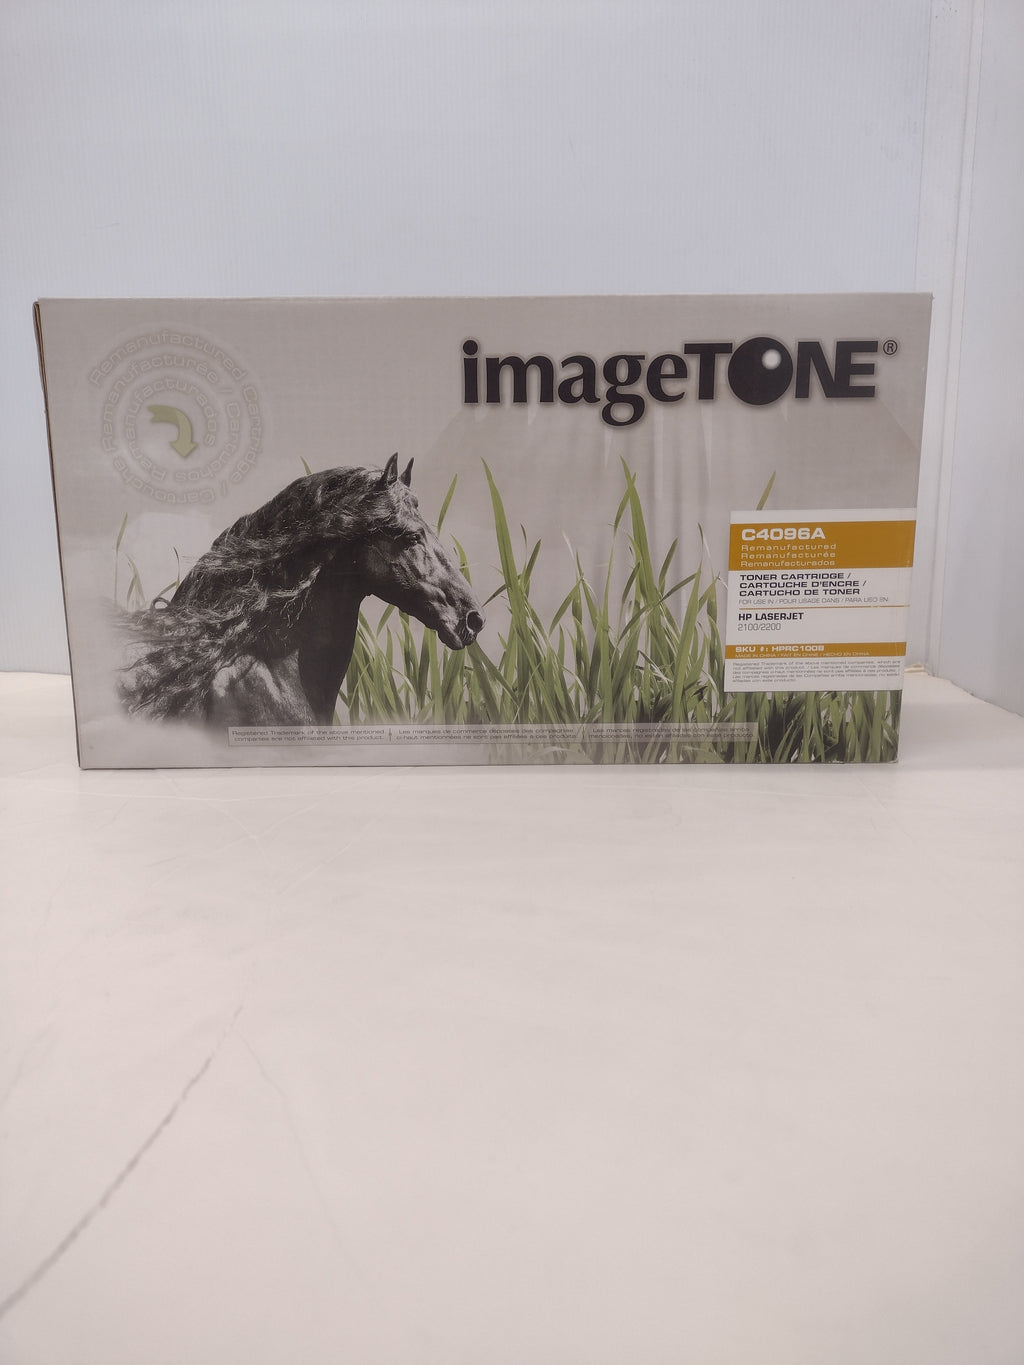 imageTONE Remanufactured HP C4096A Toner Cartridge for HP LaserJet 2100/2200